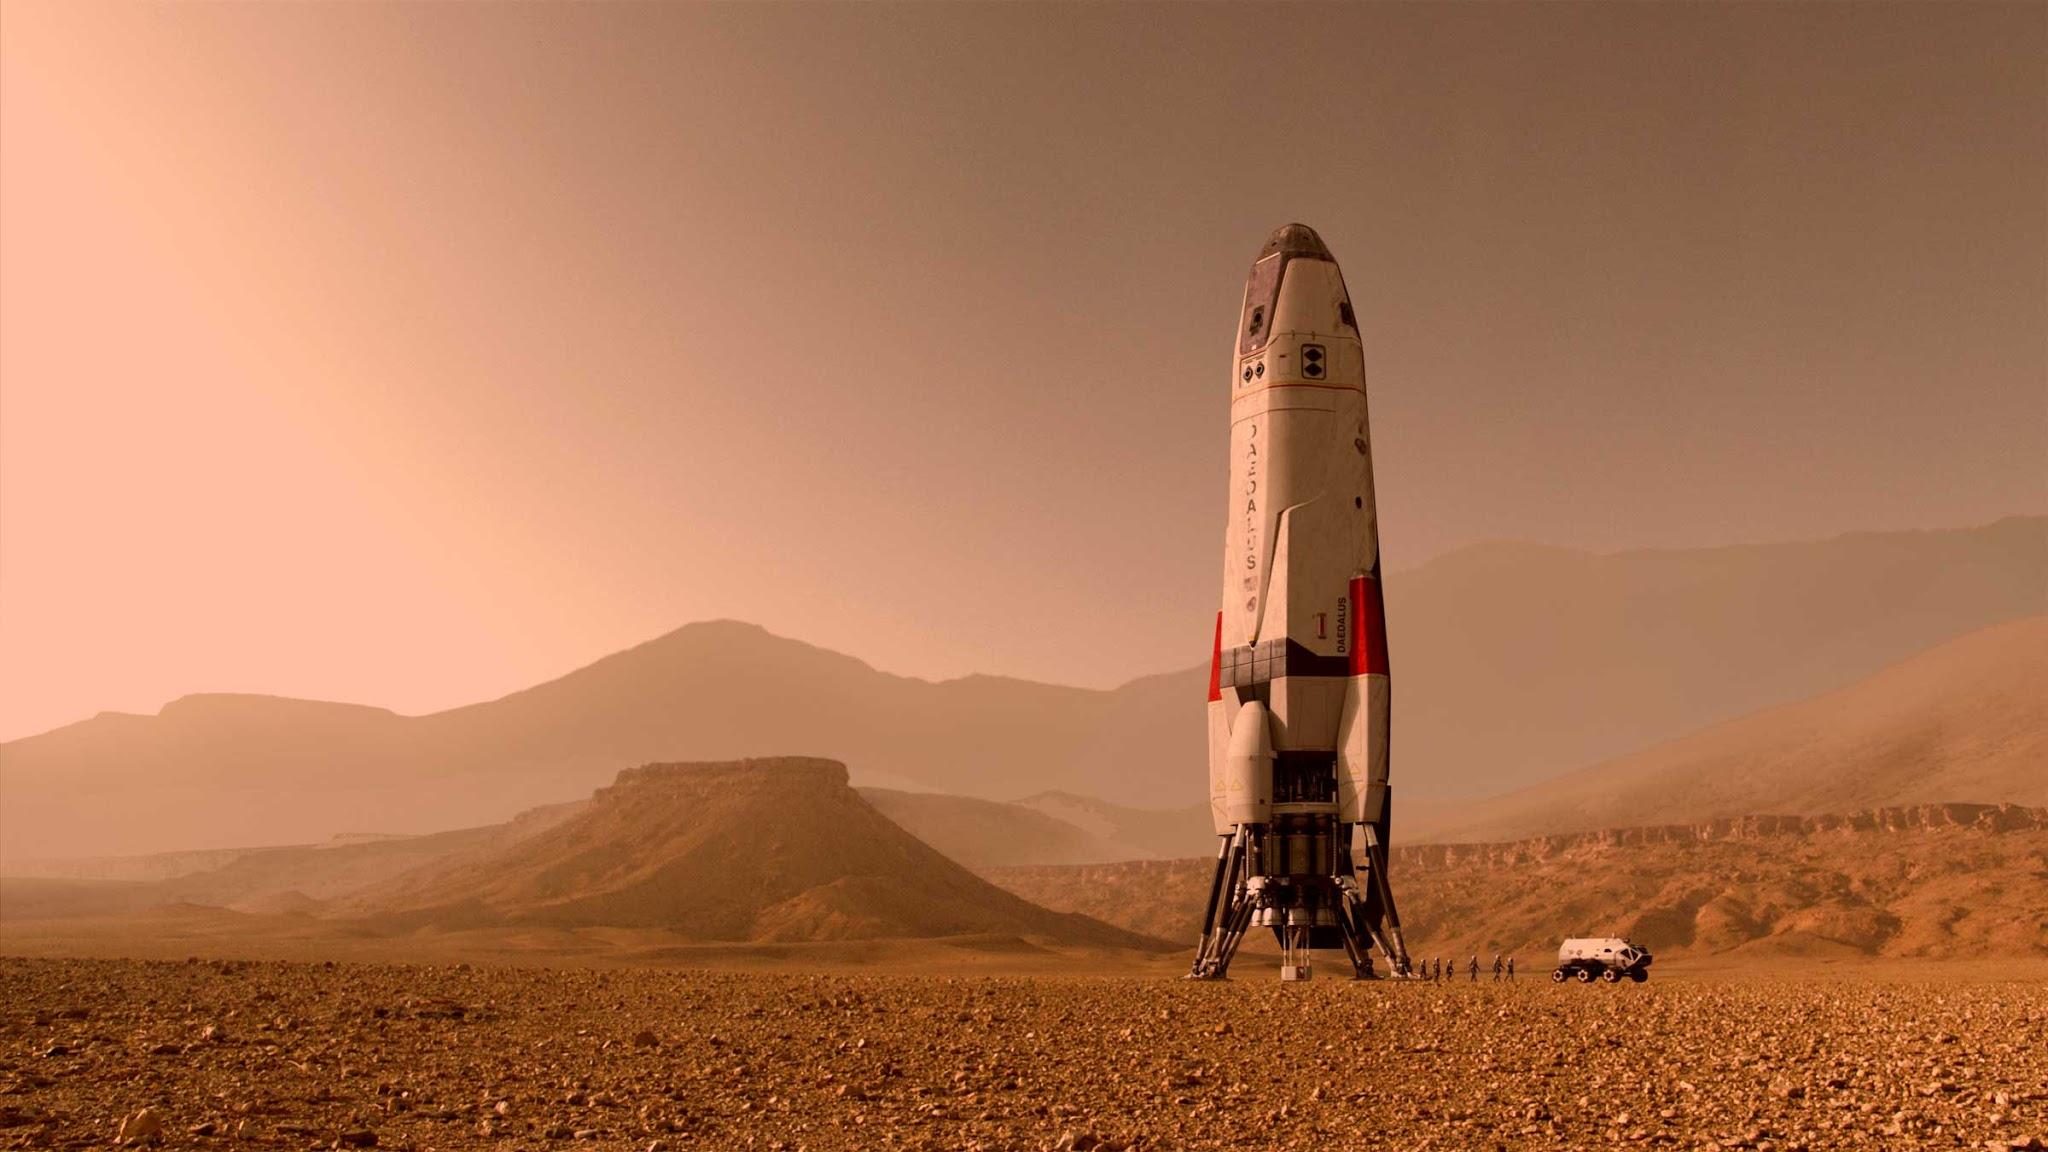 HD image from NatGeo's Mars TV series